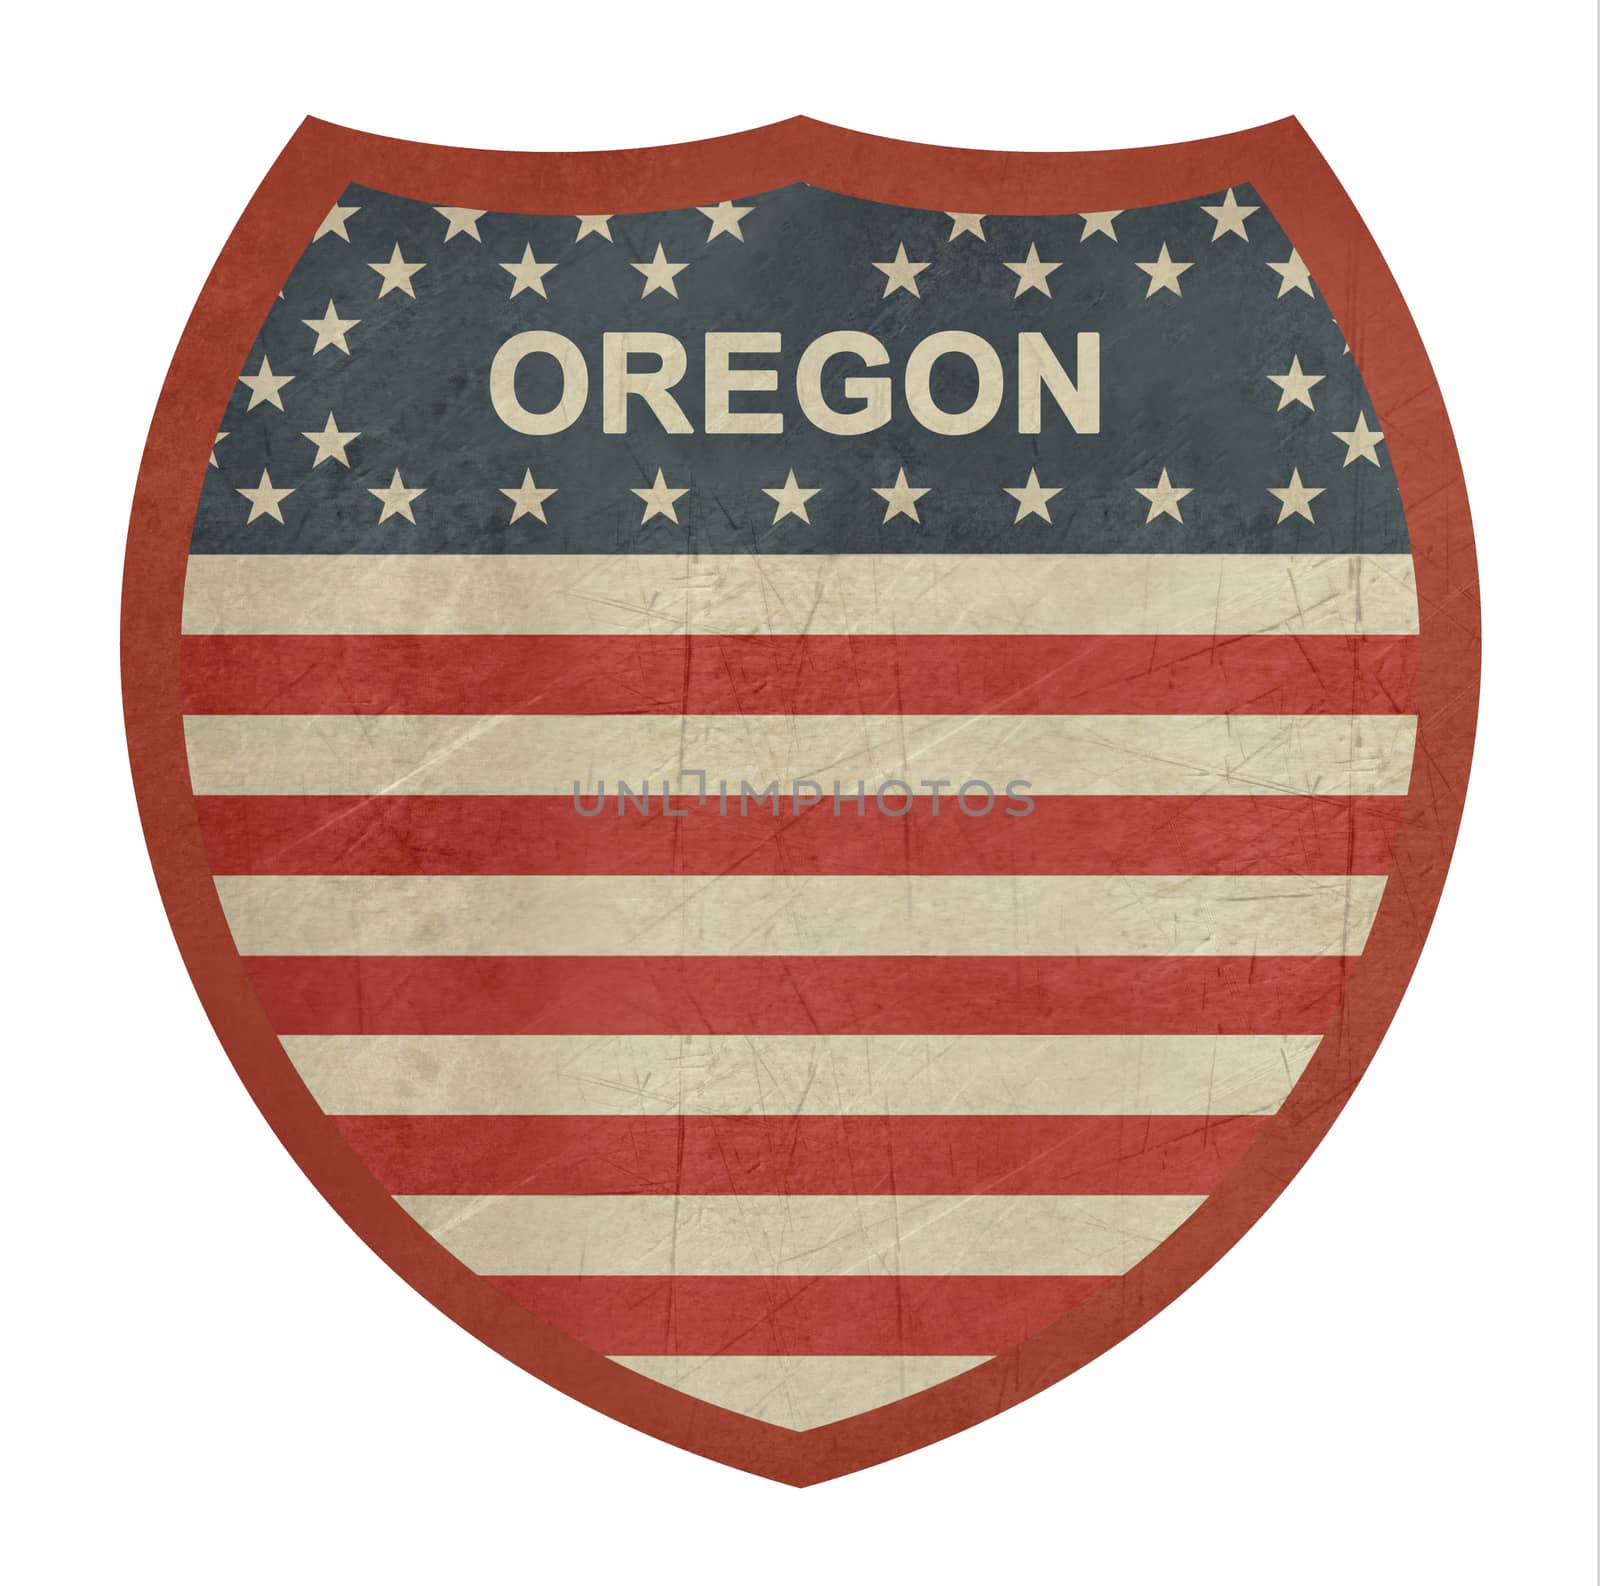 Grunge Oregon American interstate highway sign by speedfighter